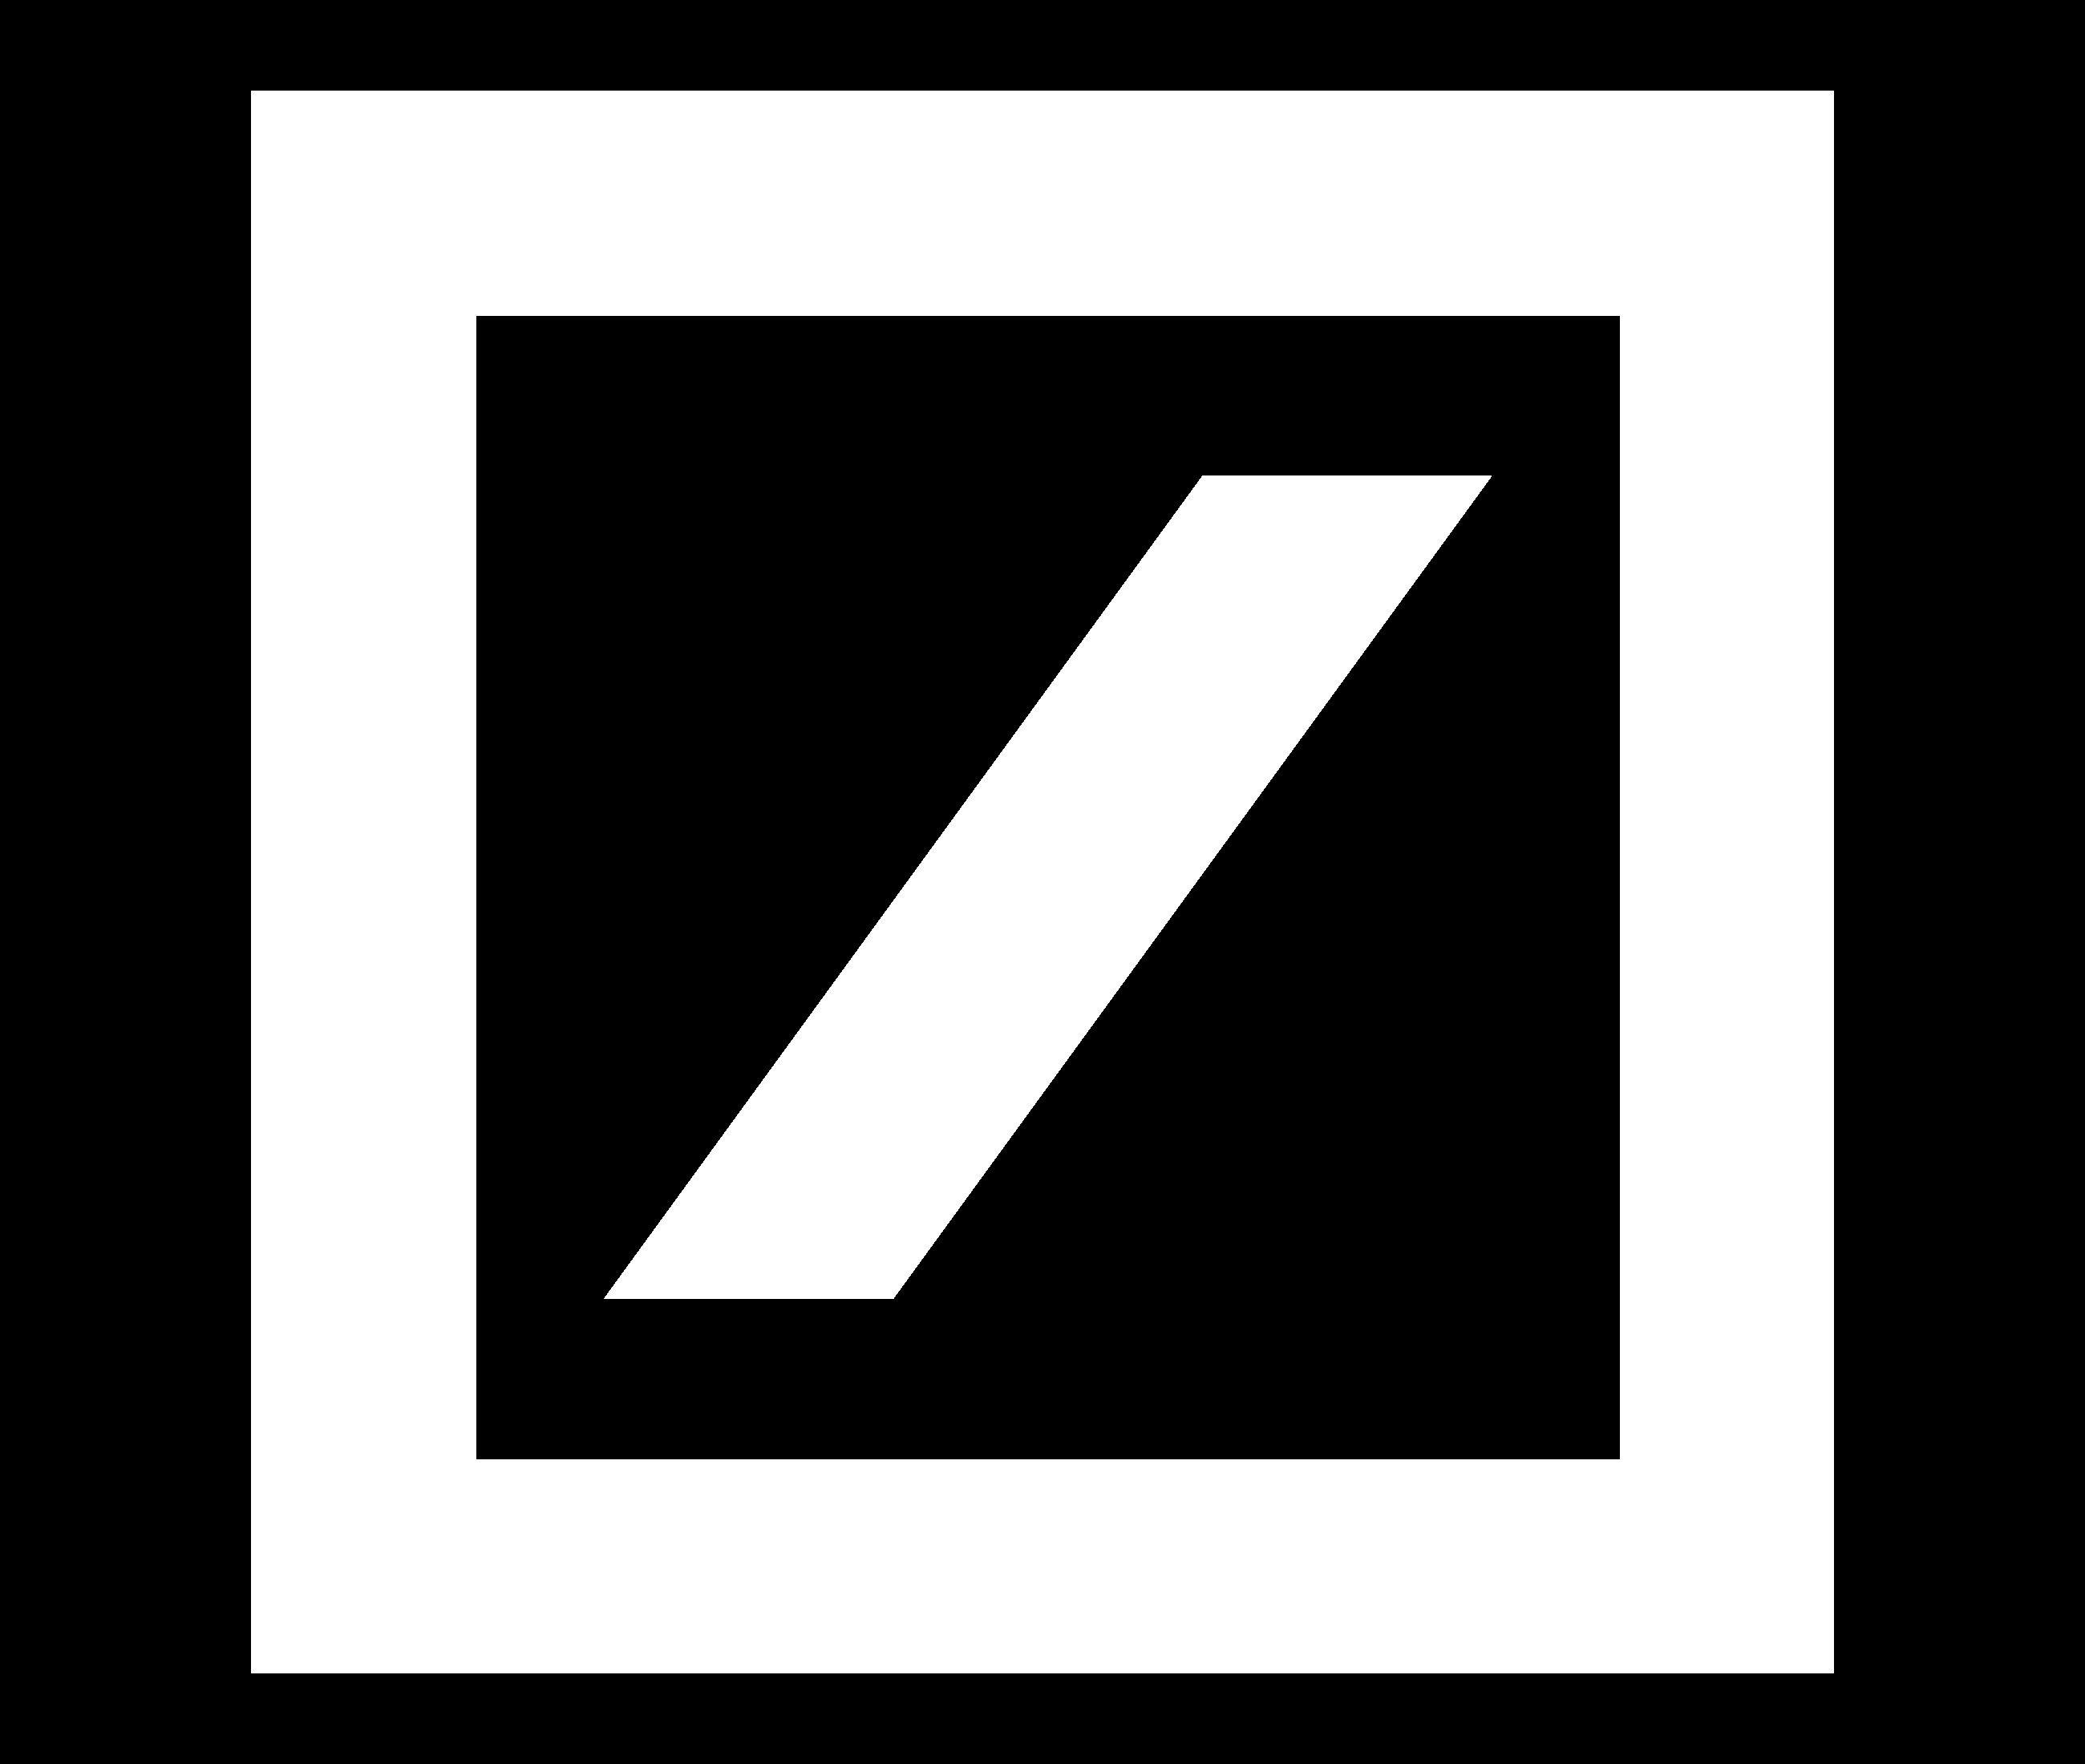 Inside Square Slash Logo - Deutsche Bank Logo, Deutsche Bank Symbol, Meaning, History and Evolution